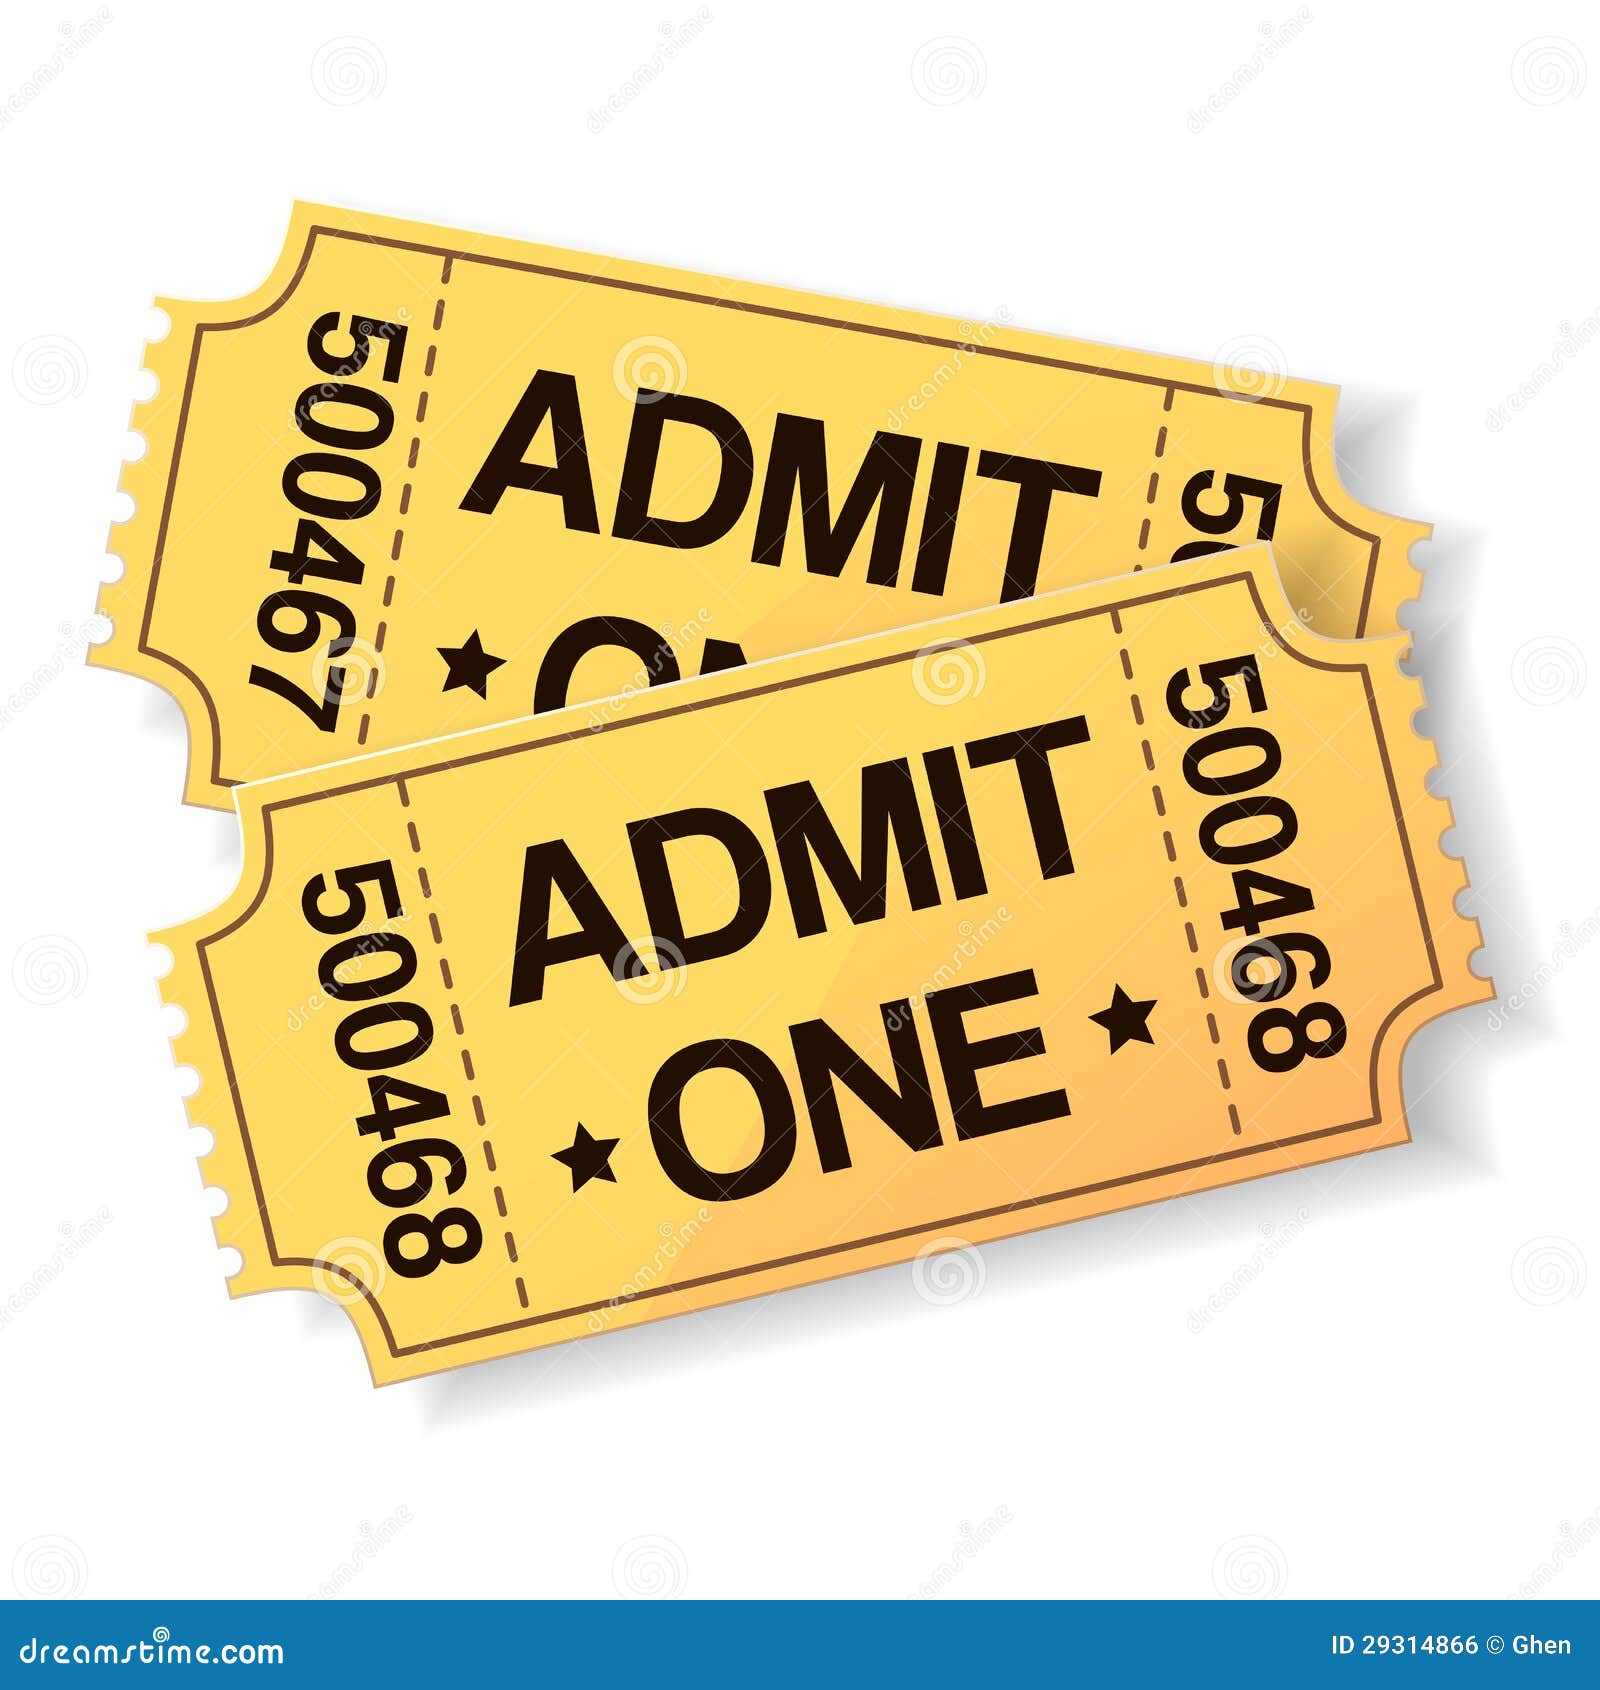 clipart movie ticket image - photo #30